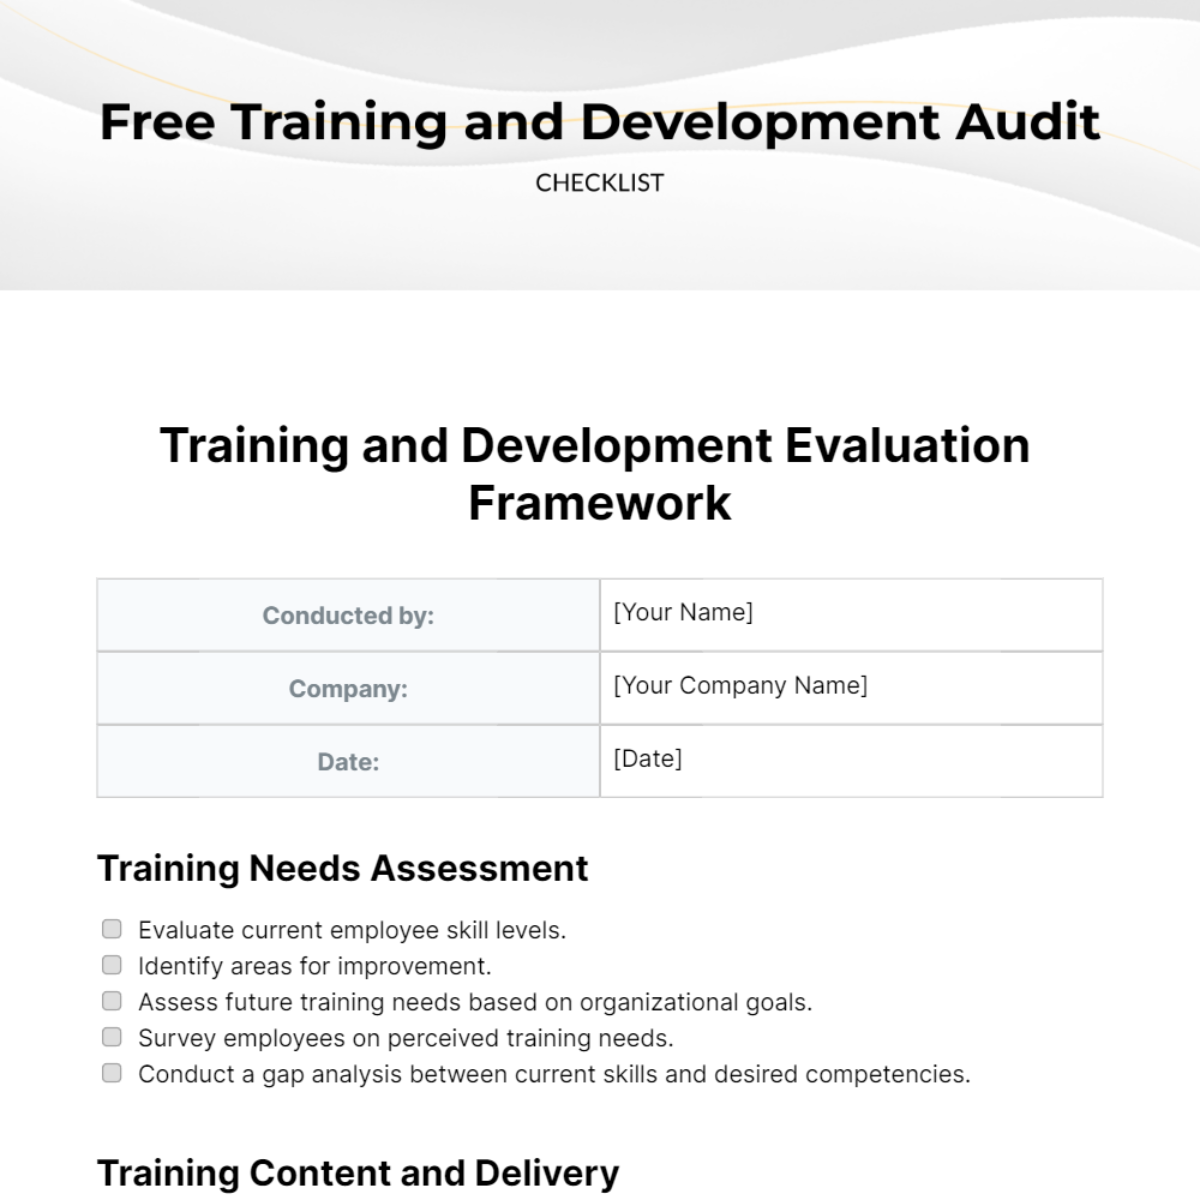 Training and Development Audit Checklist Template